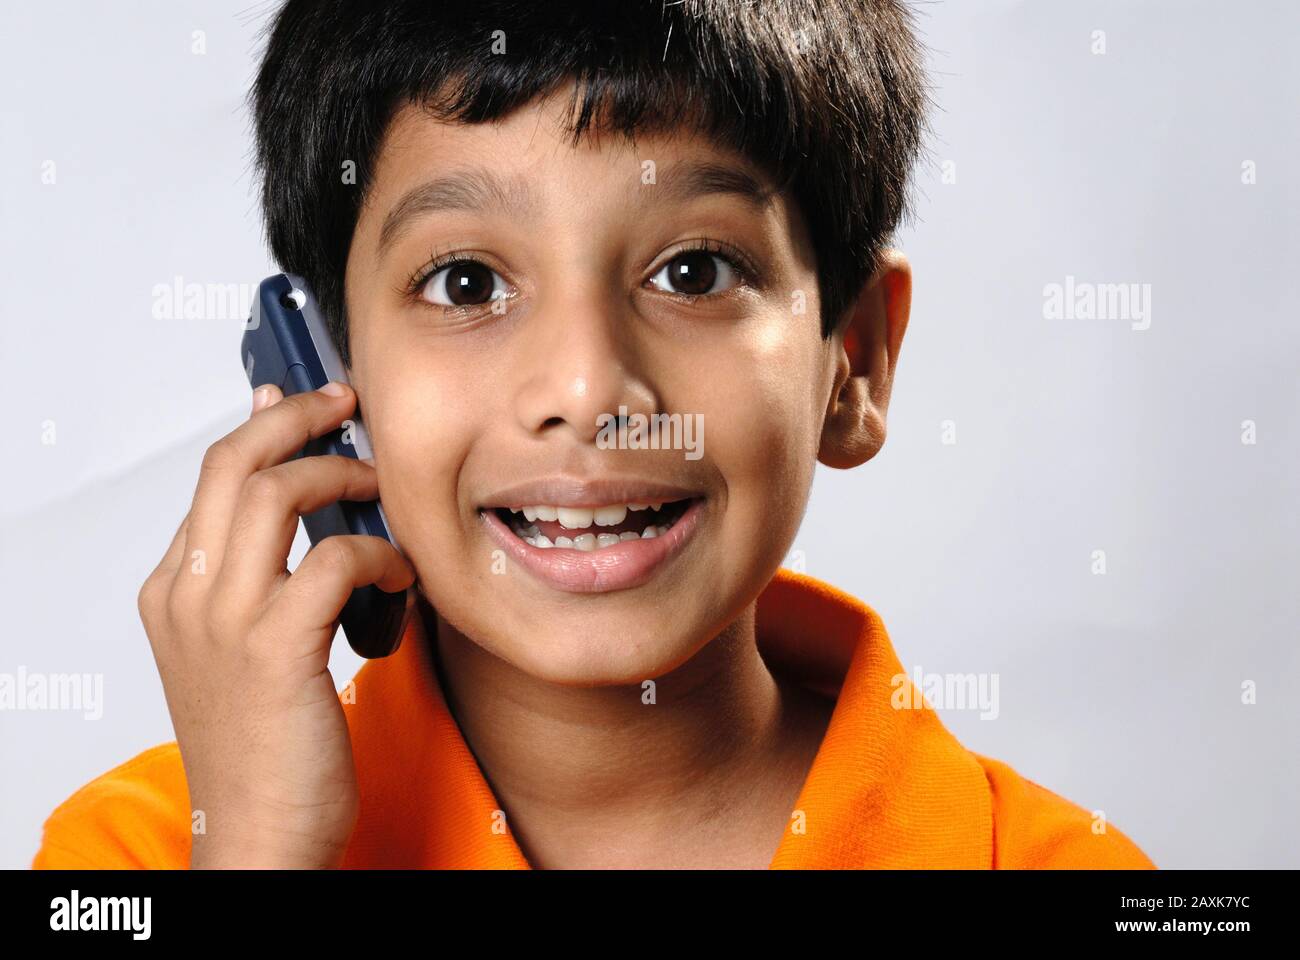 Mumbai, Maharashtra, India- Asia, Supt. 30, 2006 - Indian little cute naughty boy funny expression talking on mobile phone Stock Photo